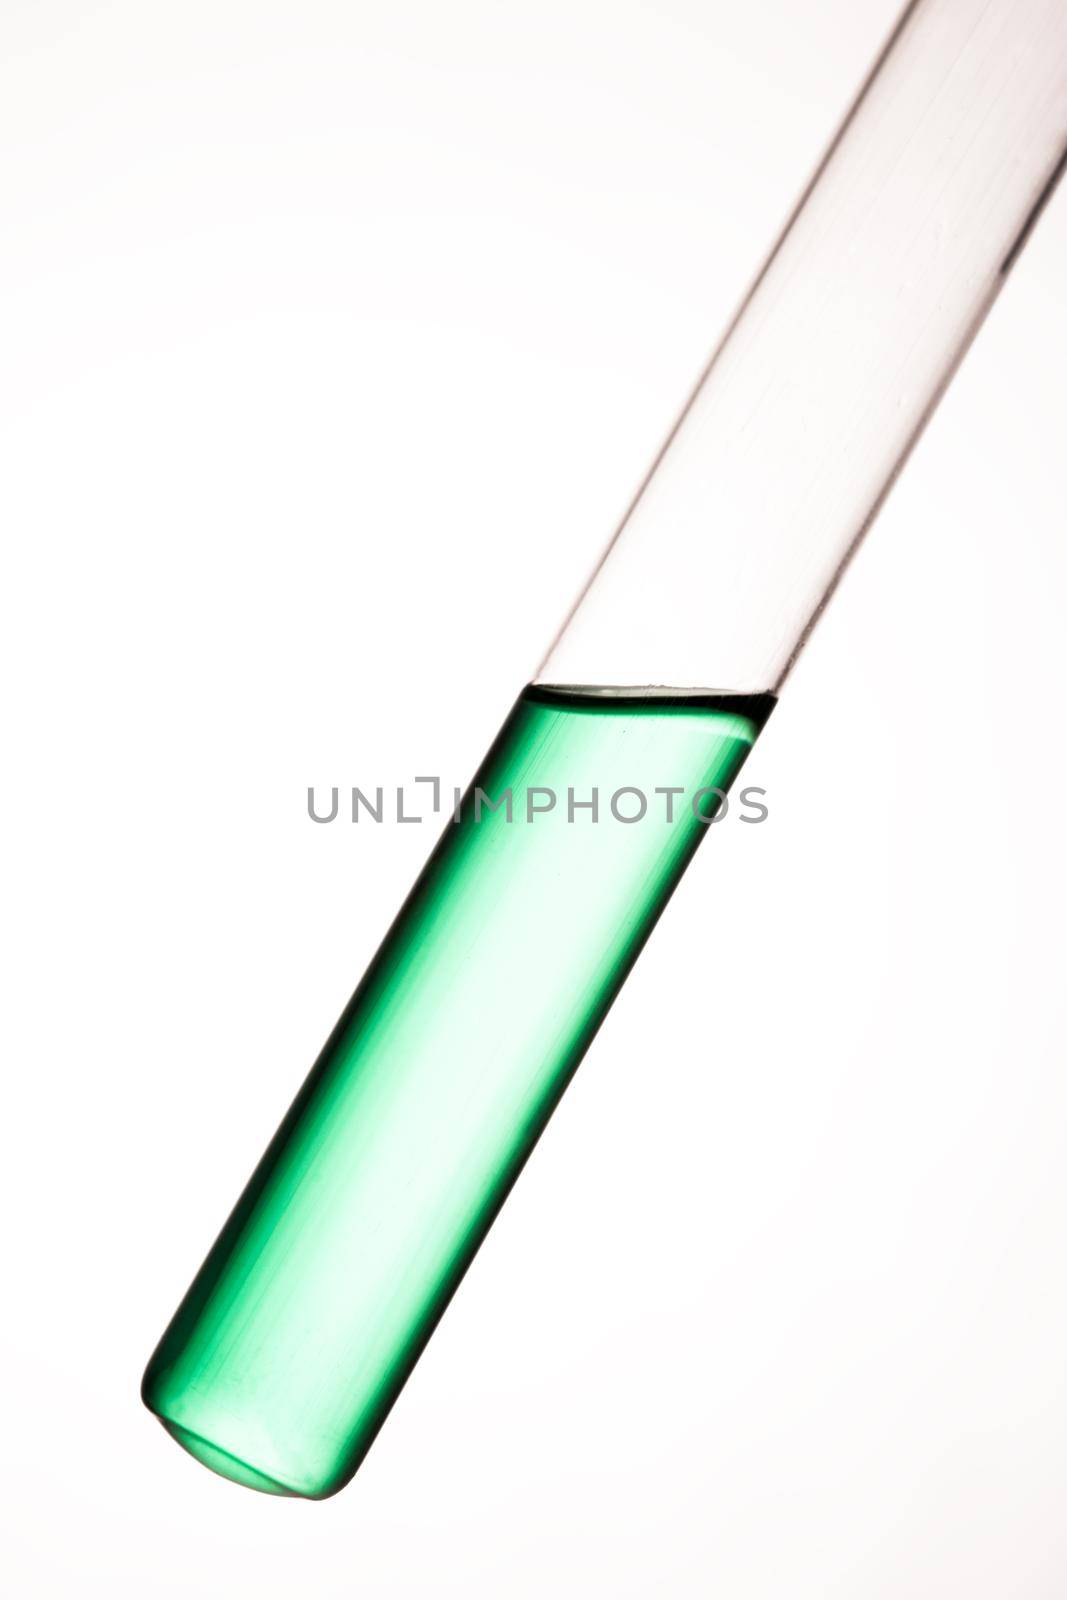 Laboratory glass tube by oksix